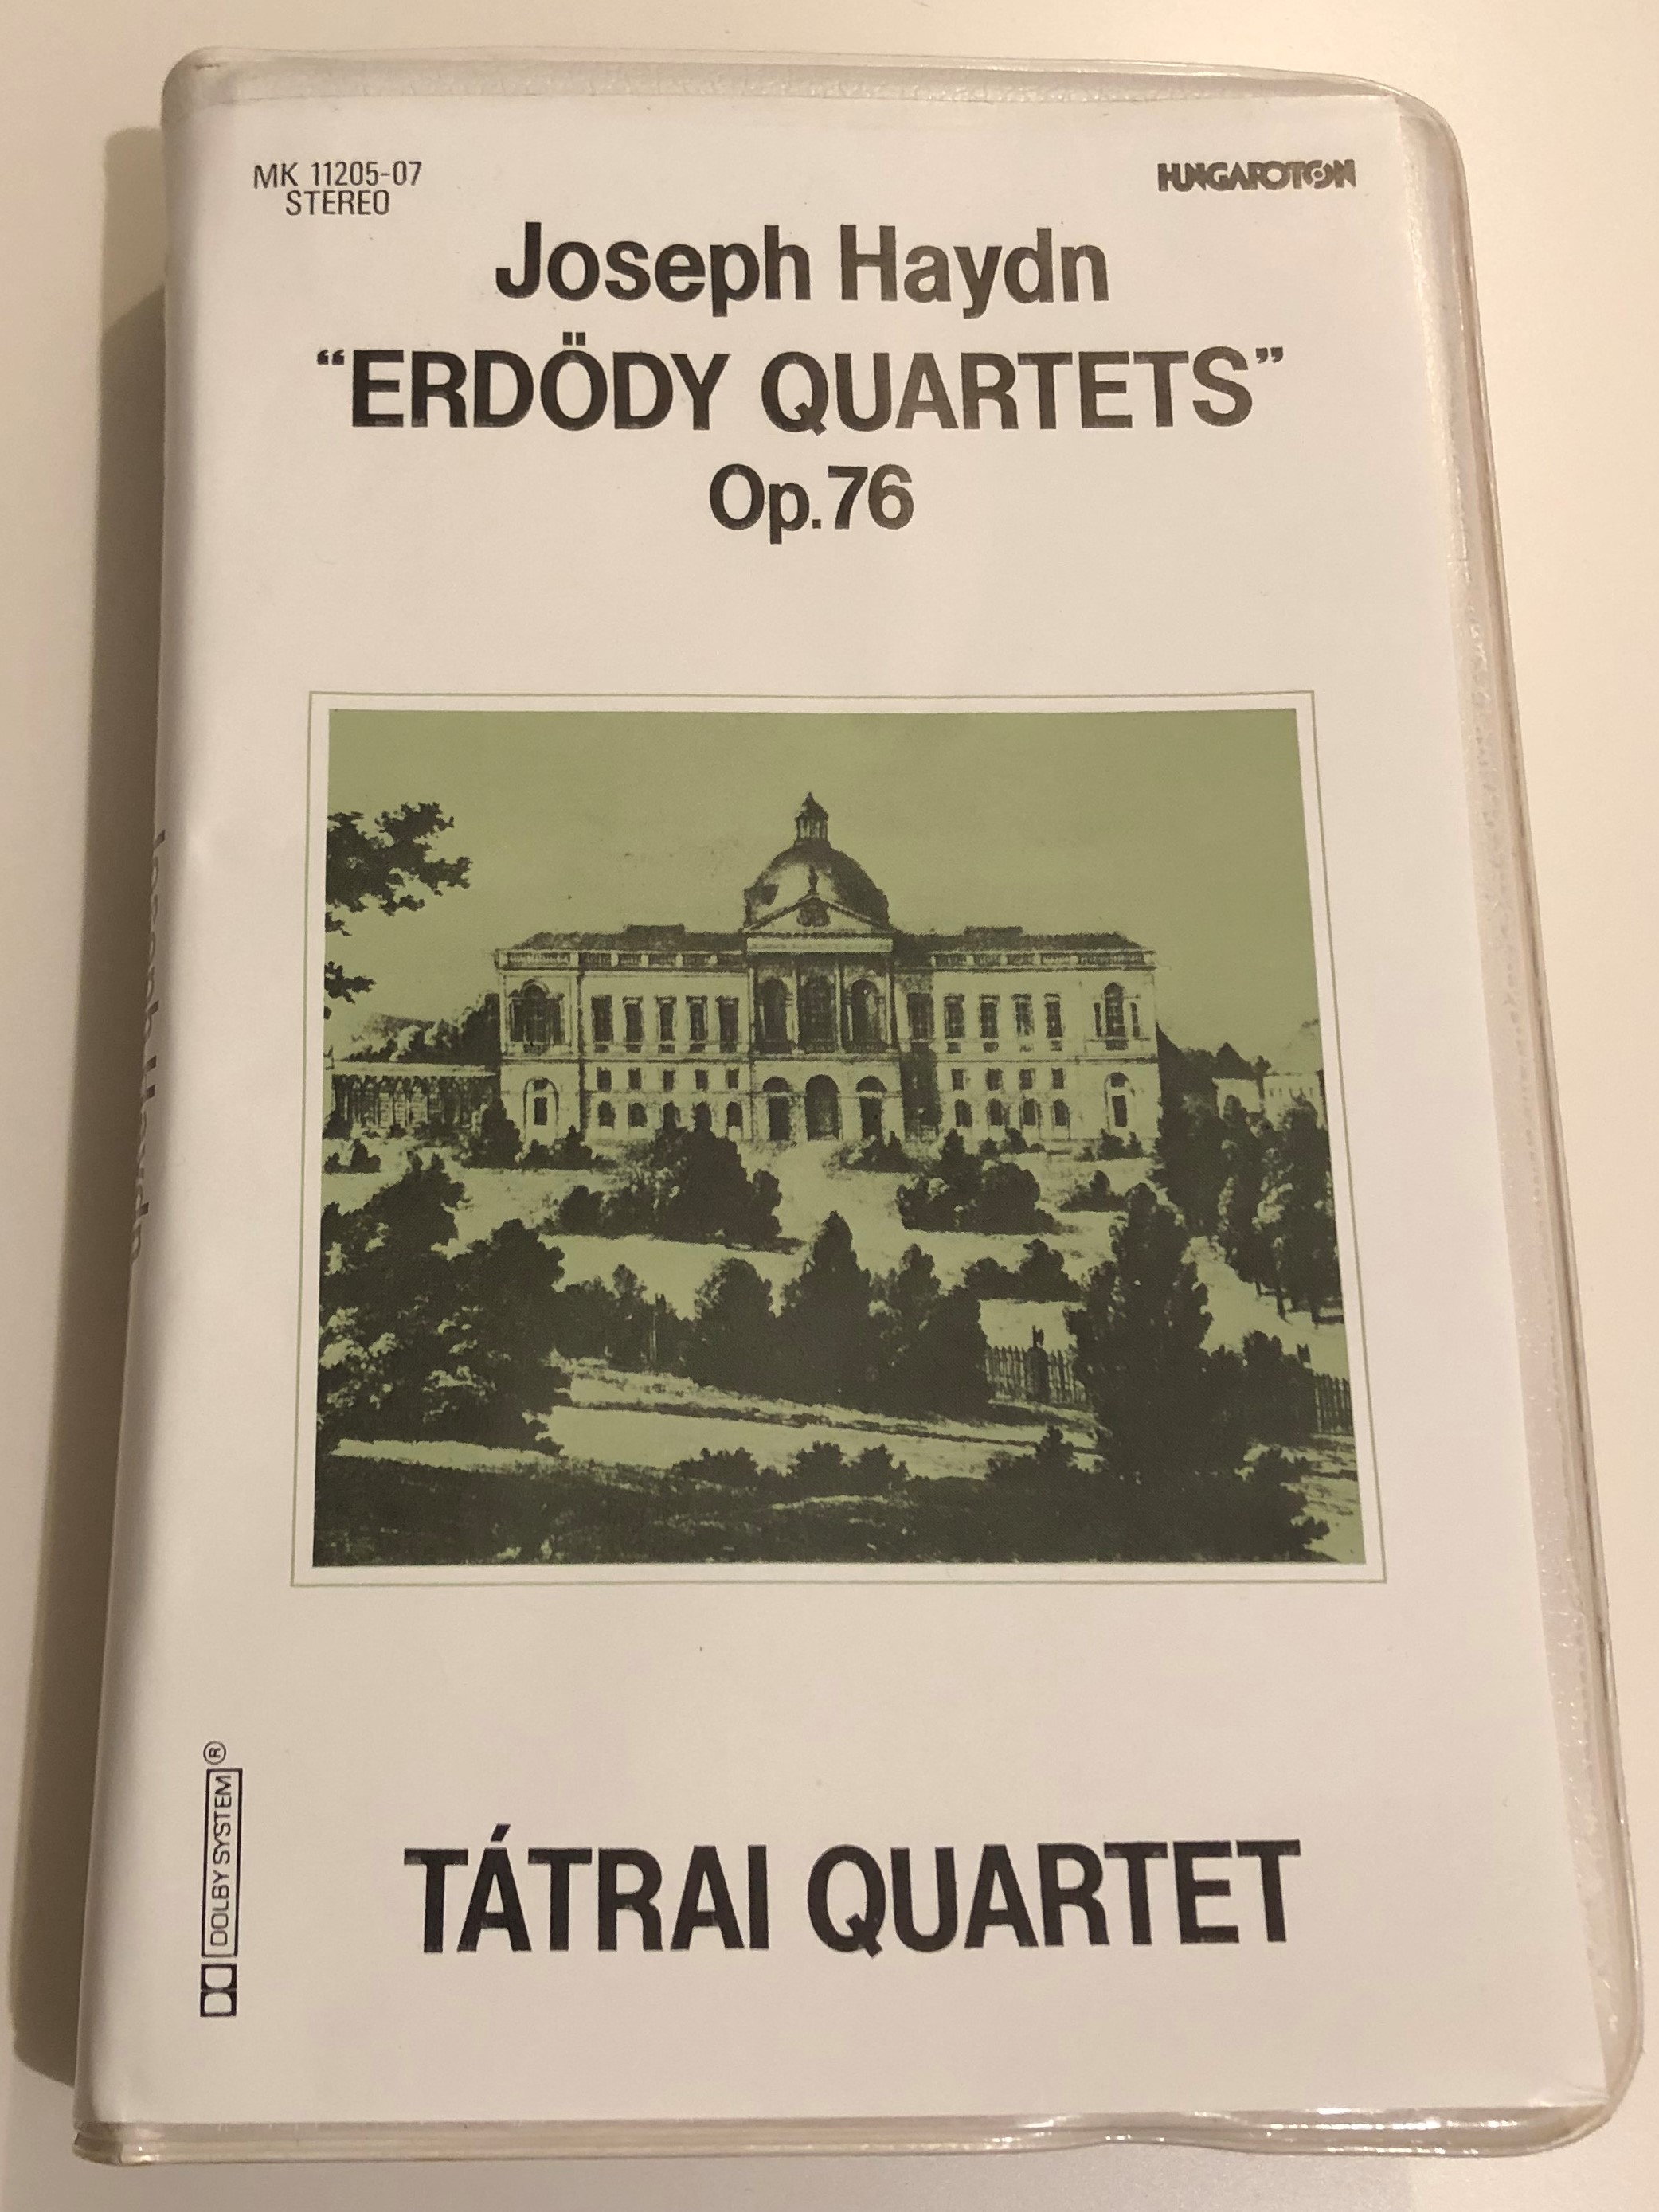 joseph-haydn-erd-dy-quartets-op.-76-t-trai-quartet-hungaroton-3x-audio-cassette-1989-stereo-mk-11205-07-1-.jpg